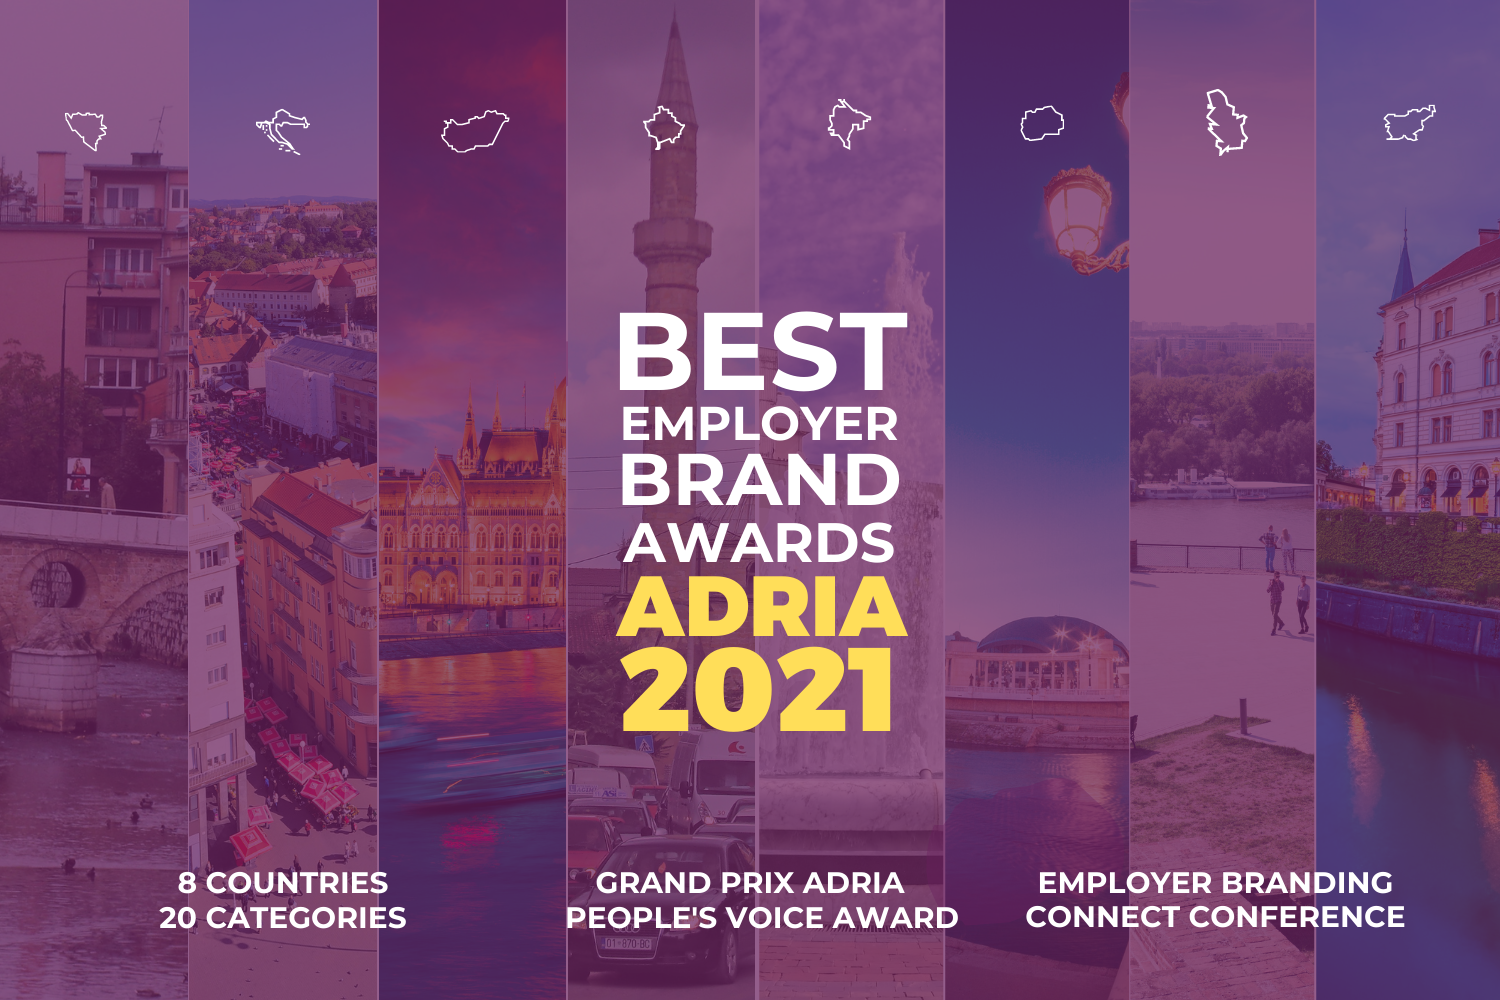 Application for 'Best Employer Brand Awards Adria 2021' open